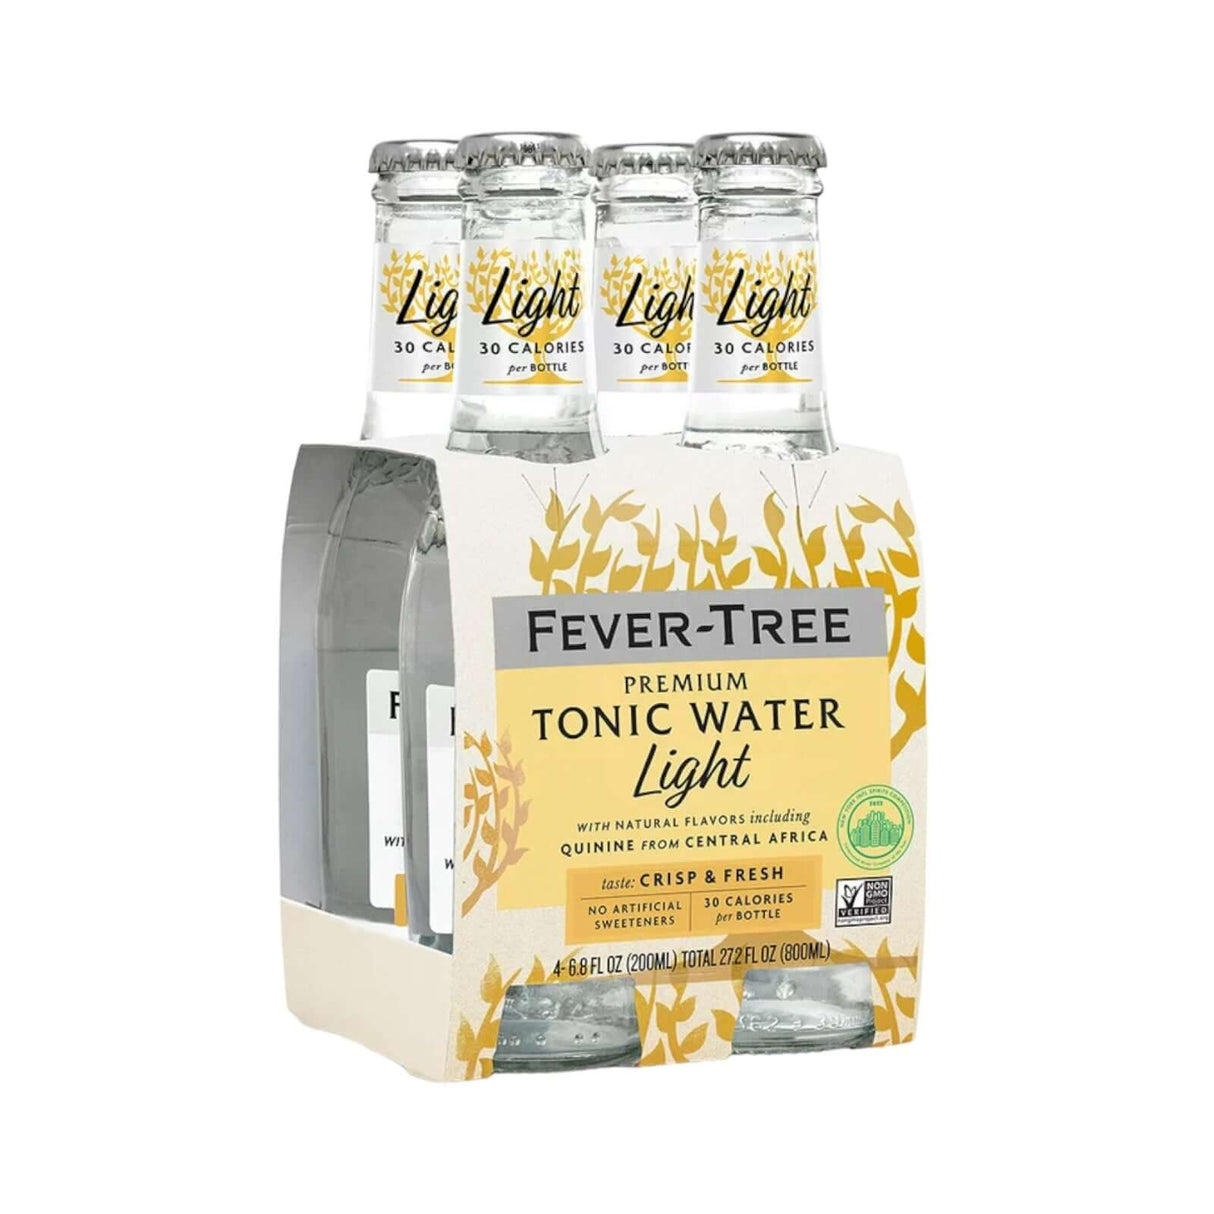 Fever-Tree Premium Tonic Water Light